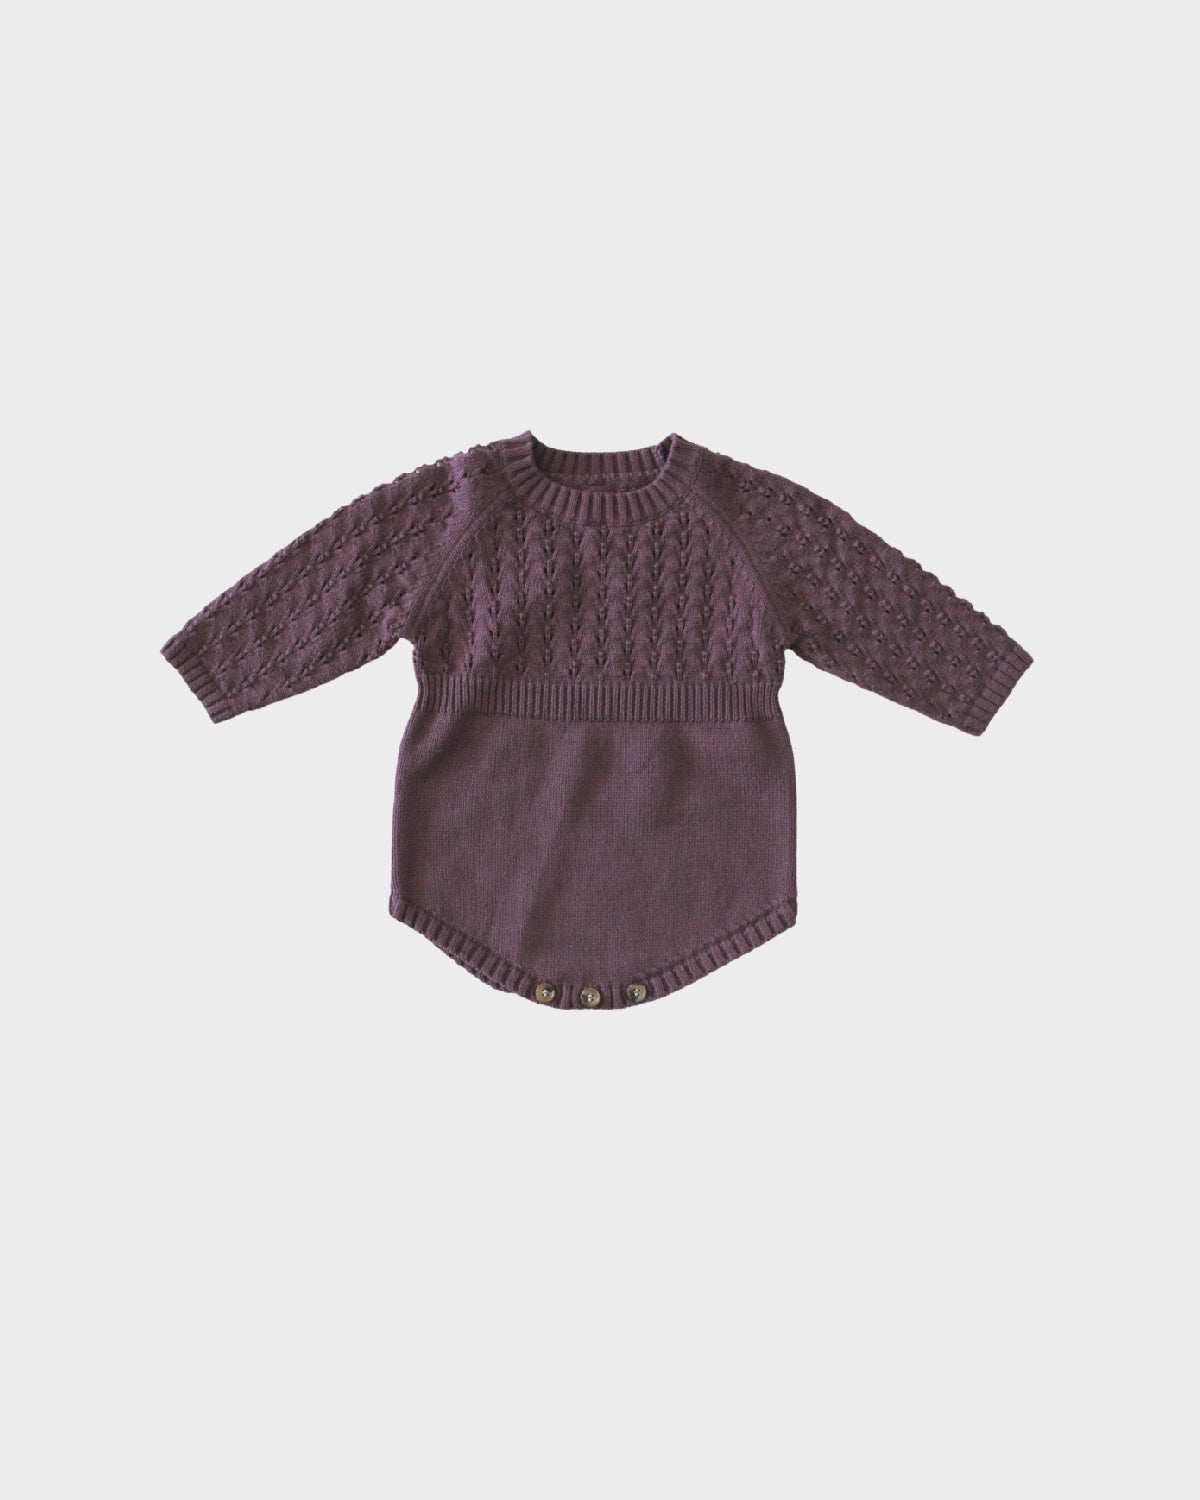 Knit Sweater Romper SAMPLES